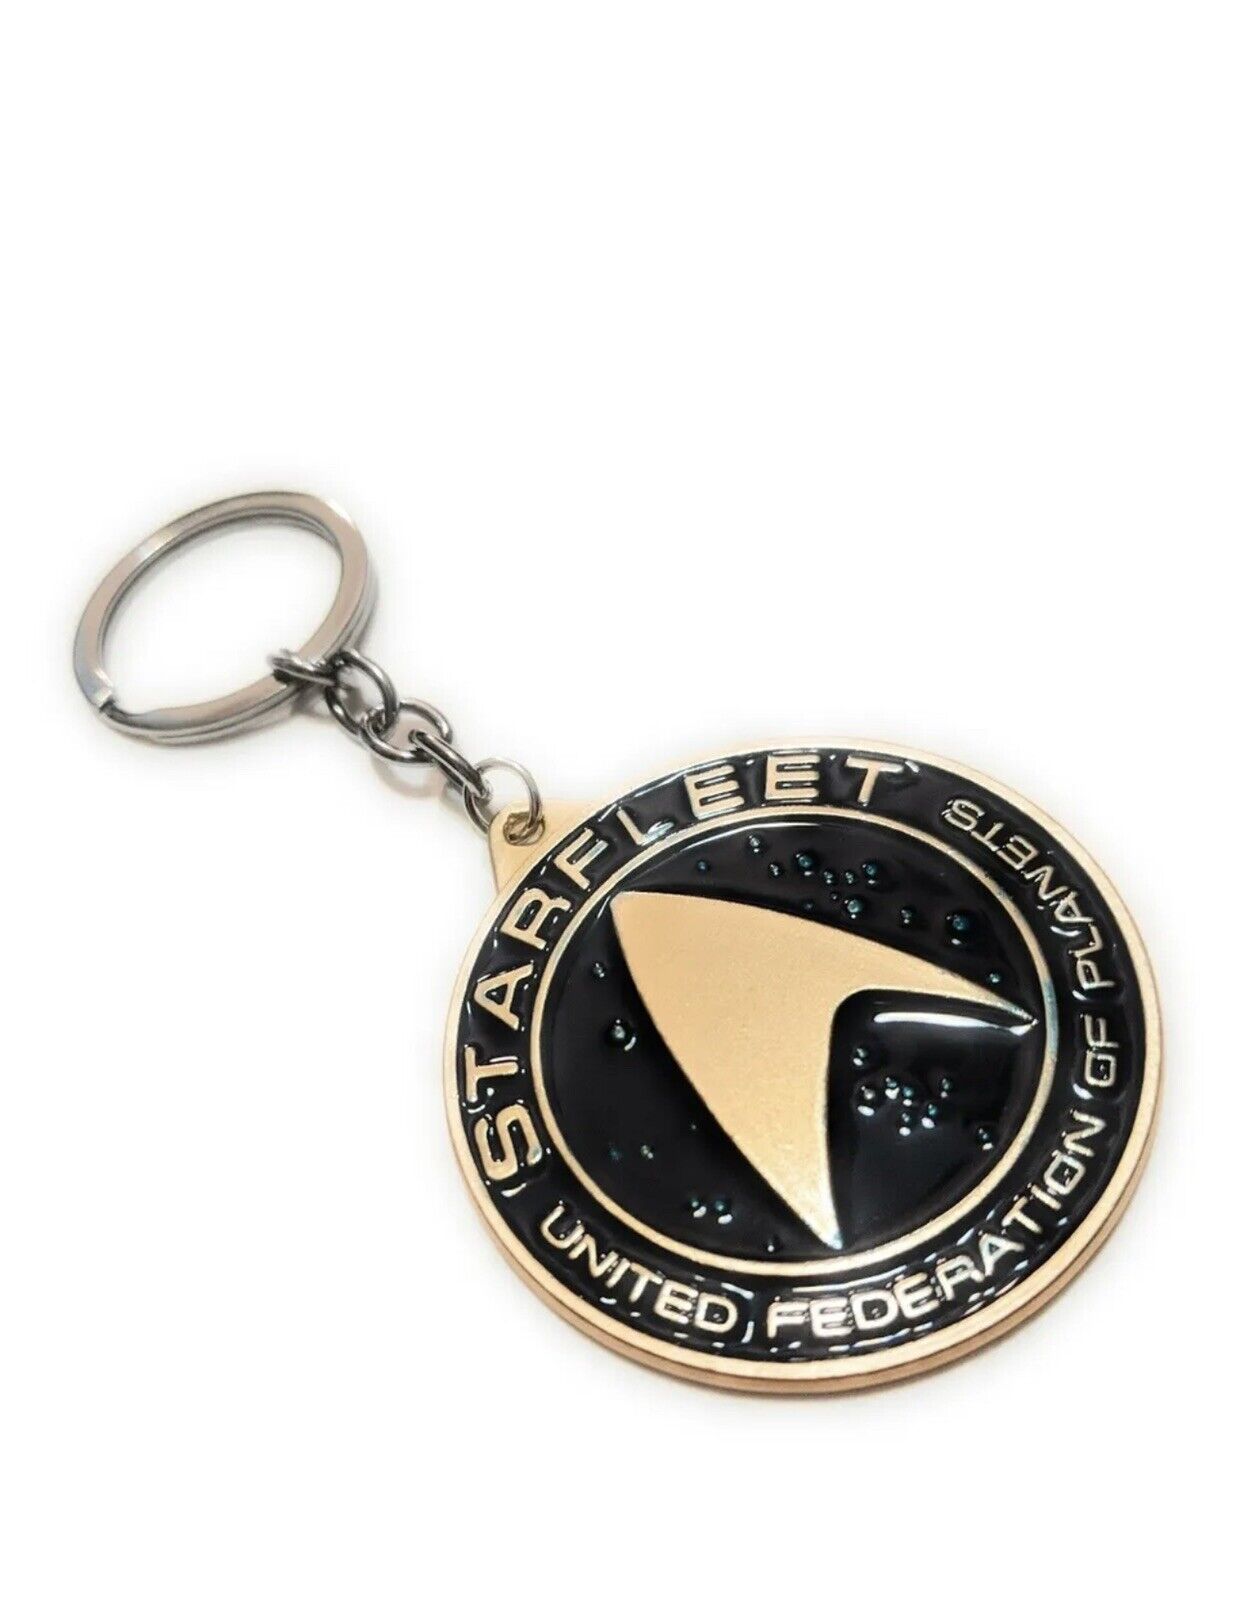 STAR TREK STARFLEET Metal Key chain Gold color Collectible gift decor 